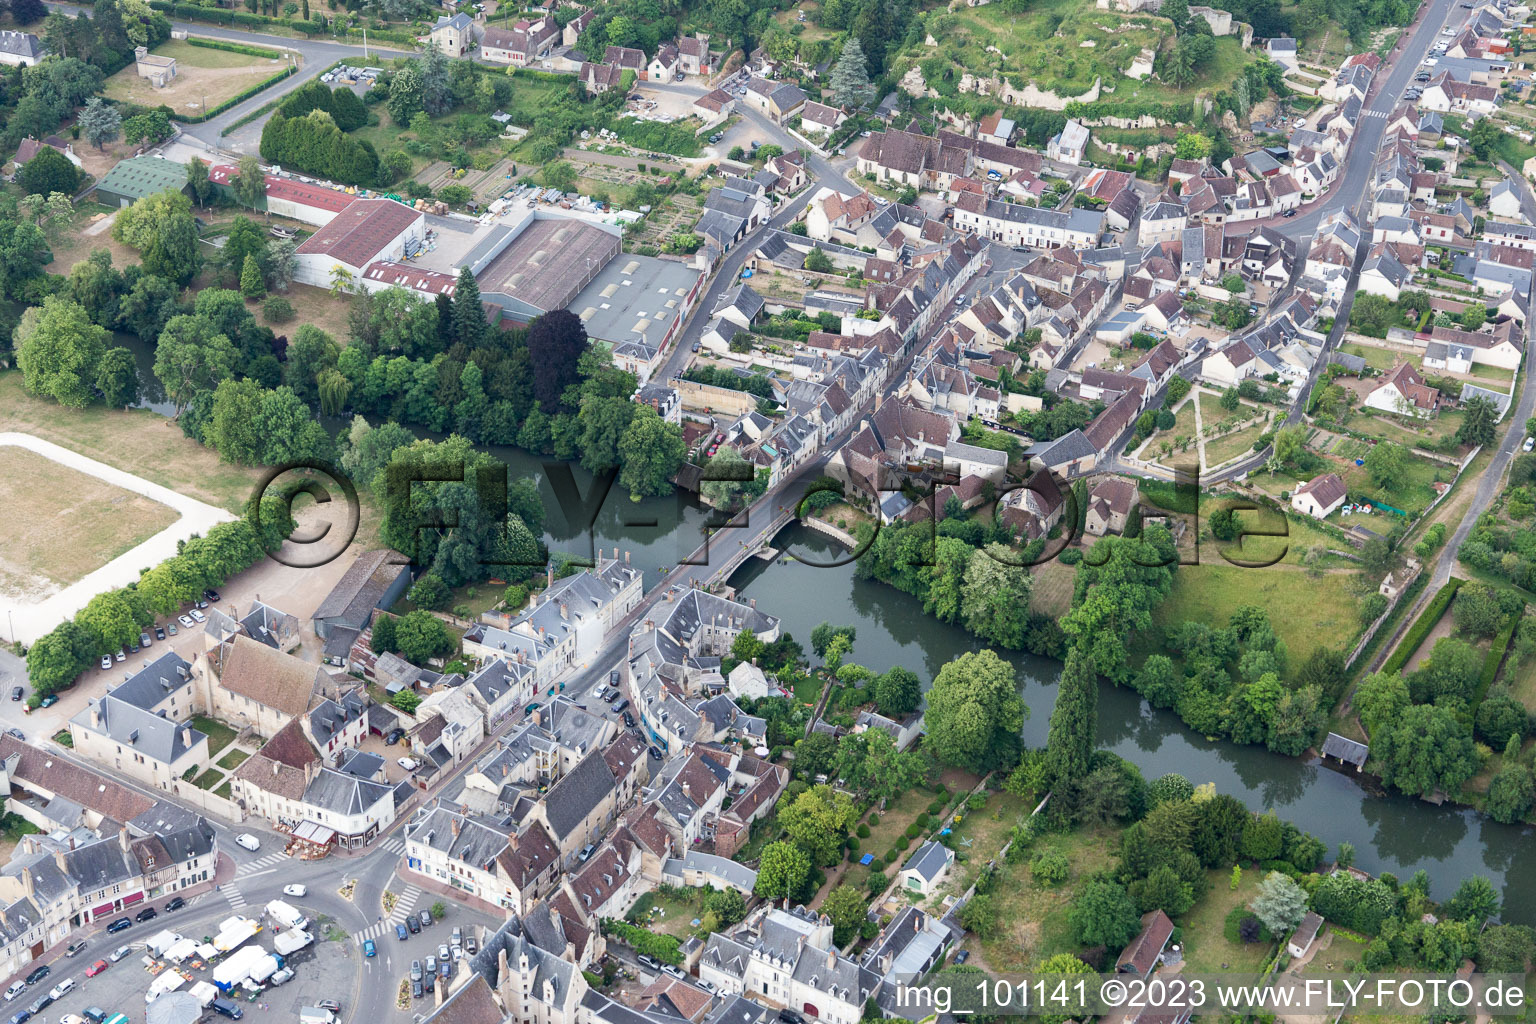 Montoire-sur-le-Loir in the state Loir et Cher, France seen from above